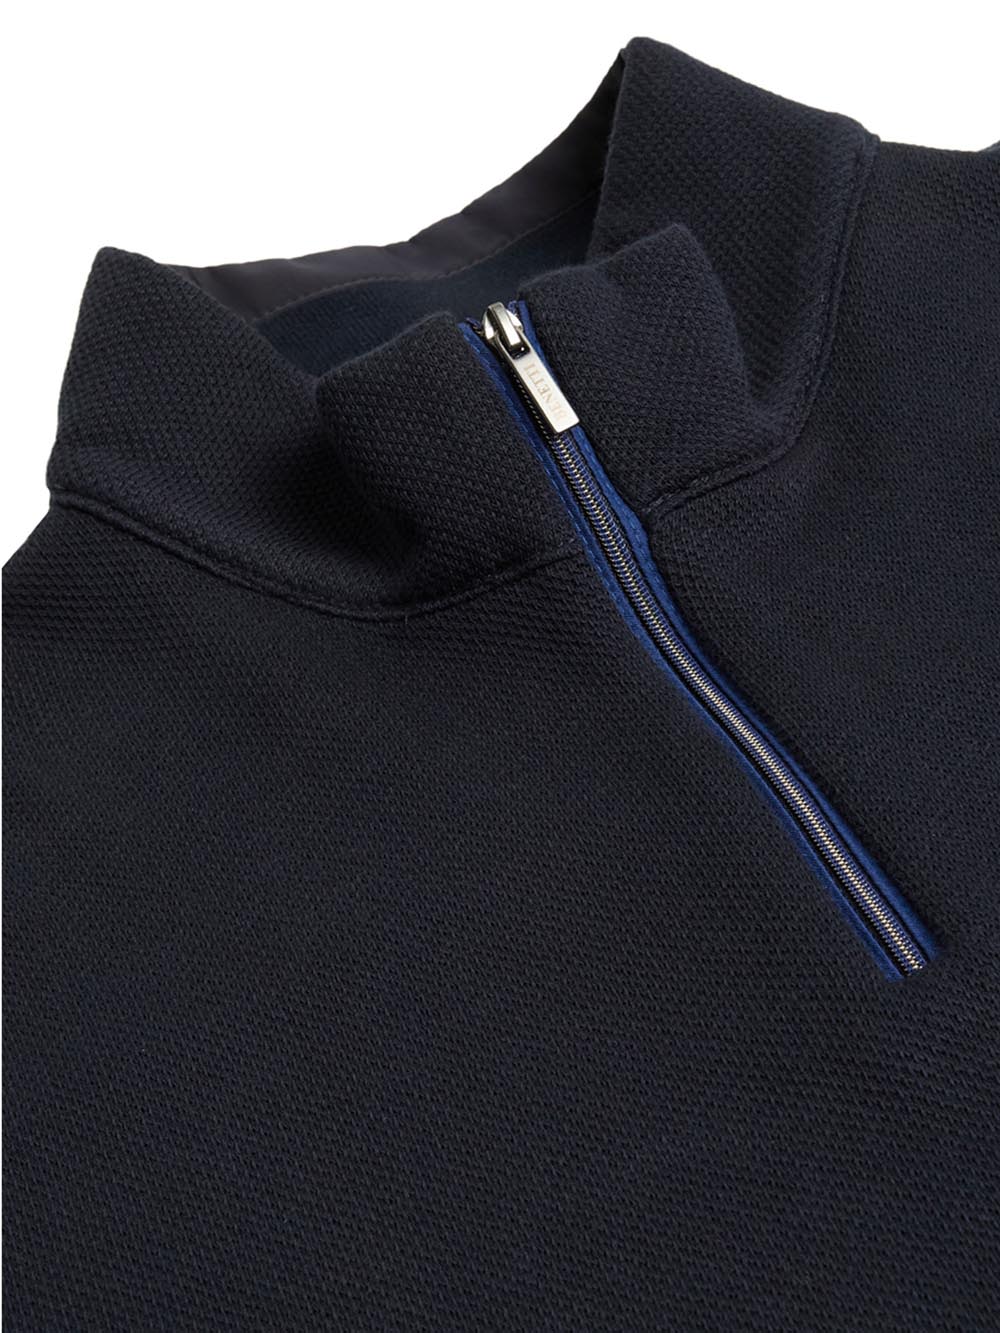 George Navy Half-zip Sweater - Tom Murphy's Formal and Menswear